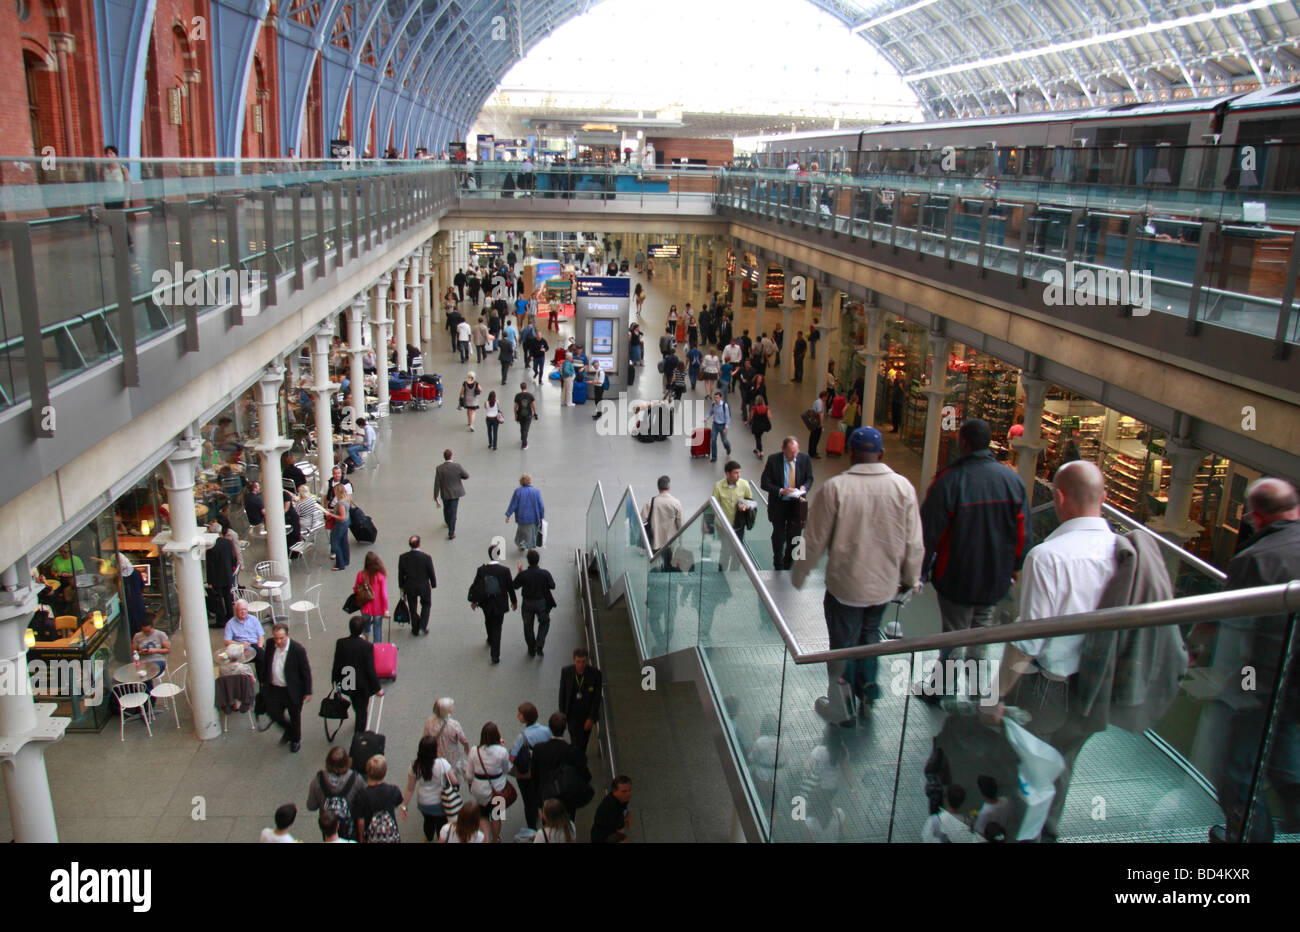 Passengers in the main terminal of the St Pancras International Railway Station, London, UK. Stock Photo